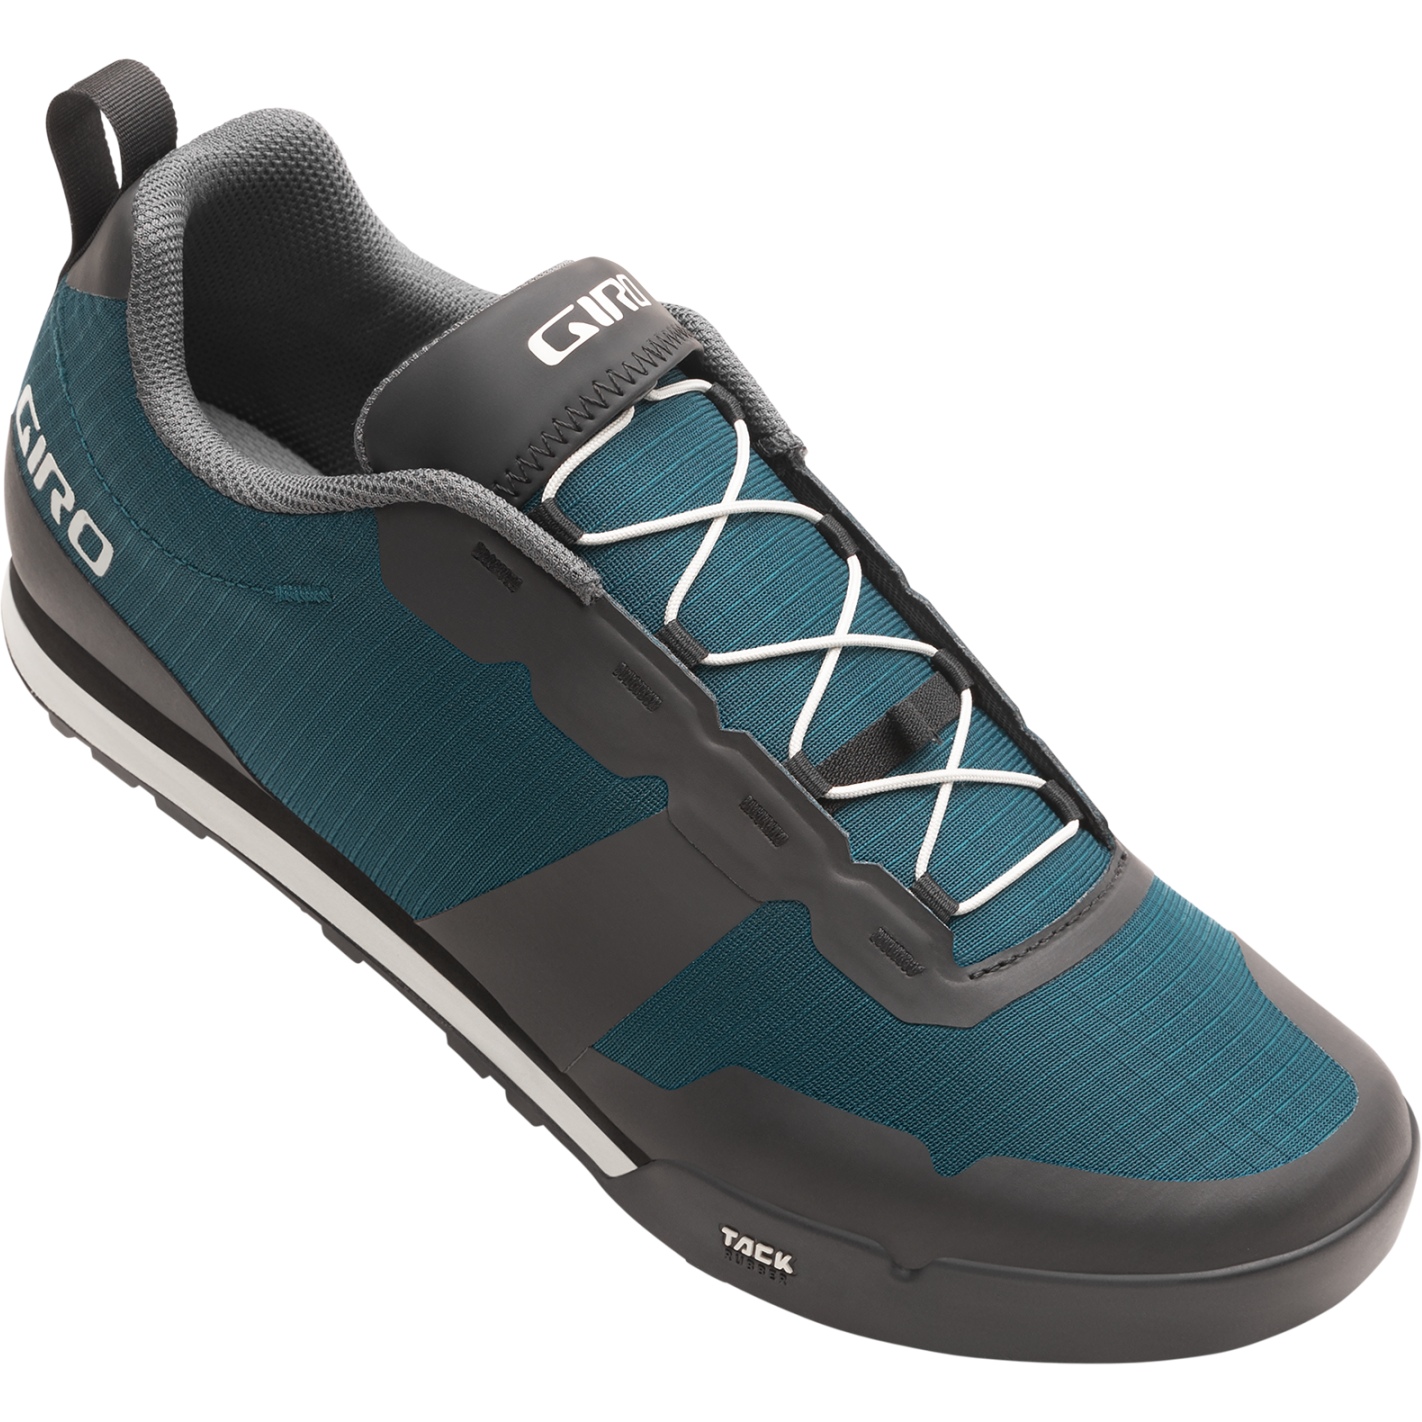 Productfoto van Giro Tracker Fastlace Flatpedal Schoenen Dames - harbor blue/sandstone